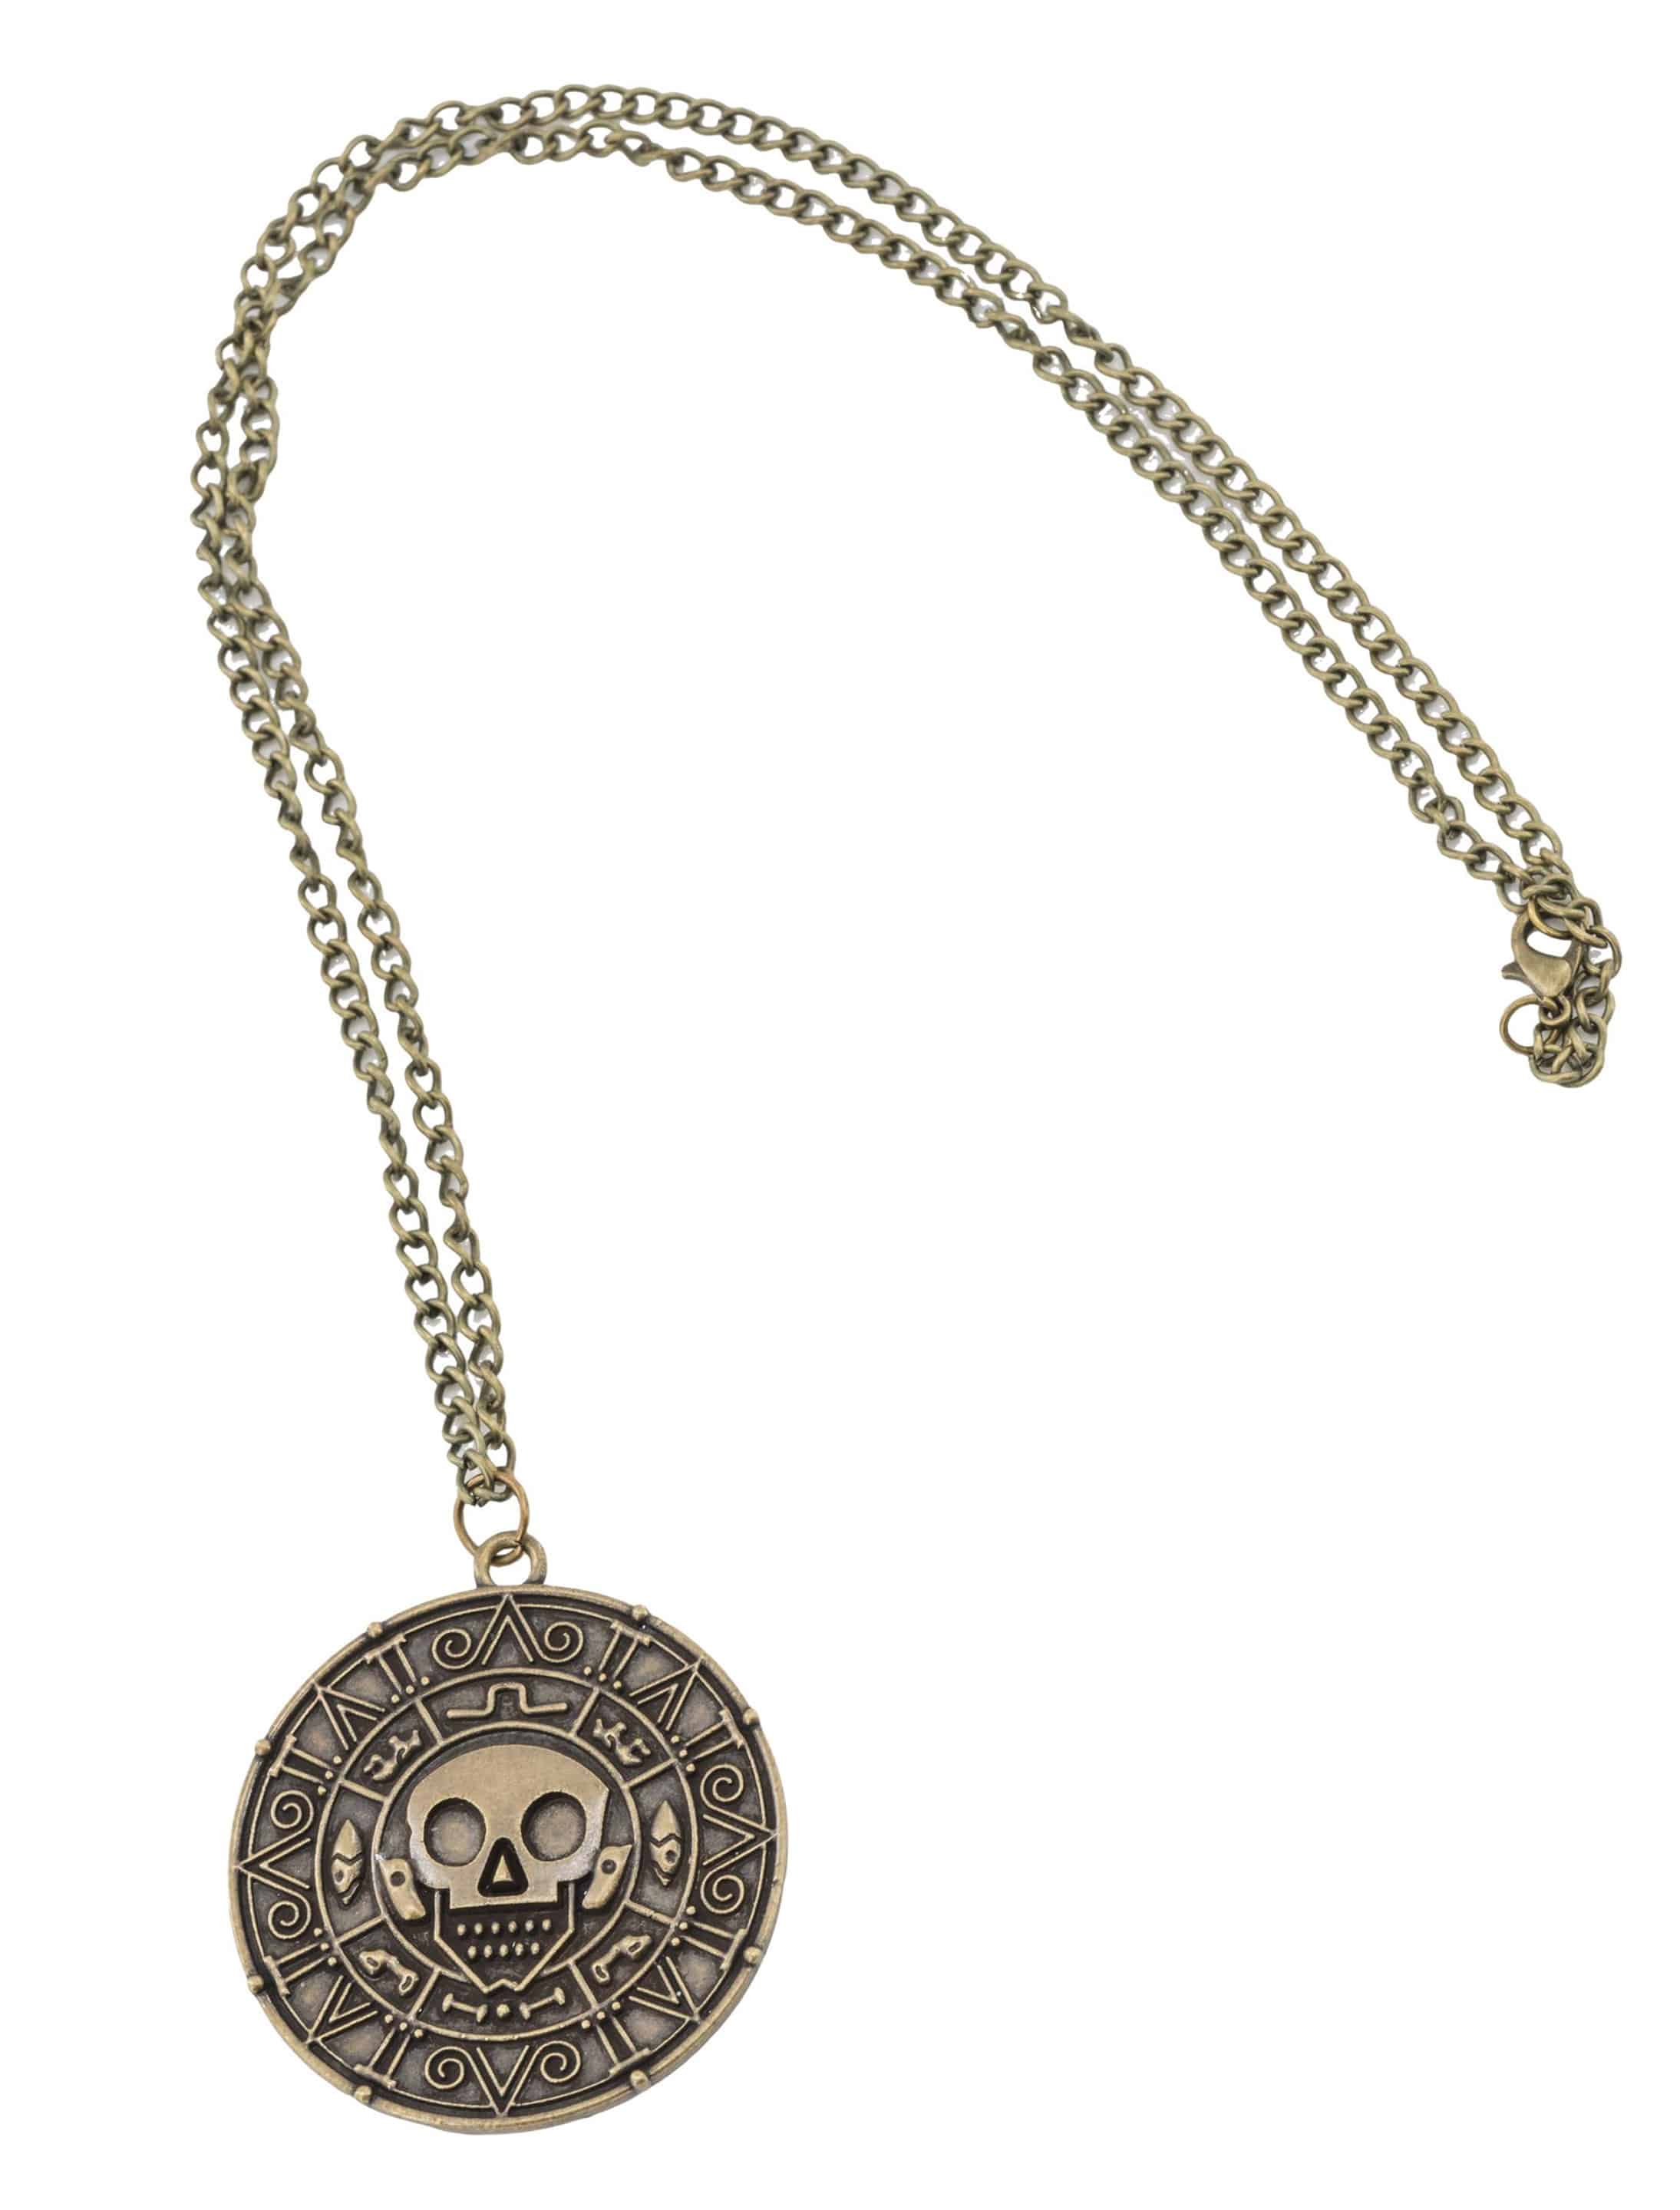 Halskette Medaillon Totenschädel gold